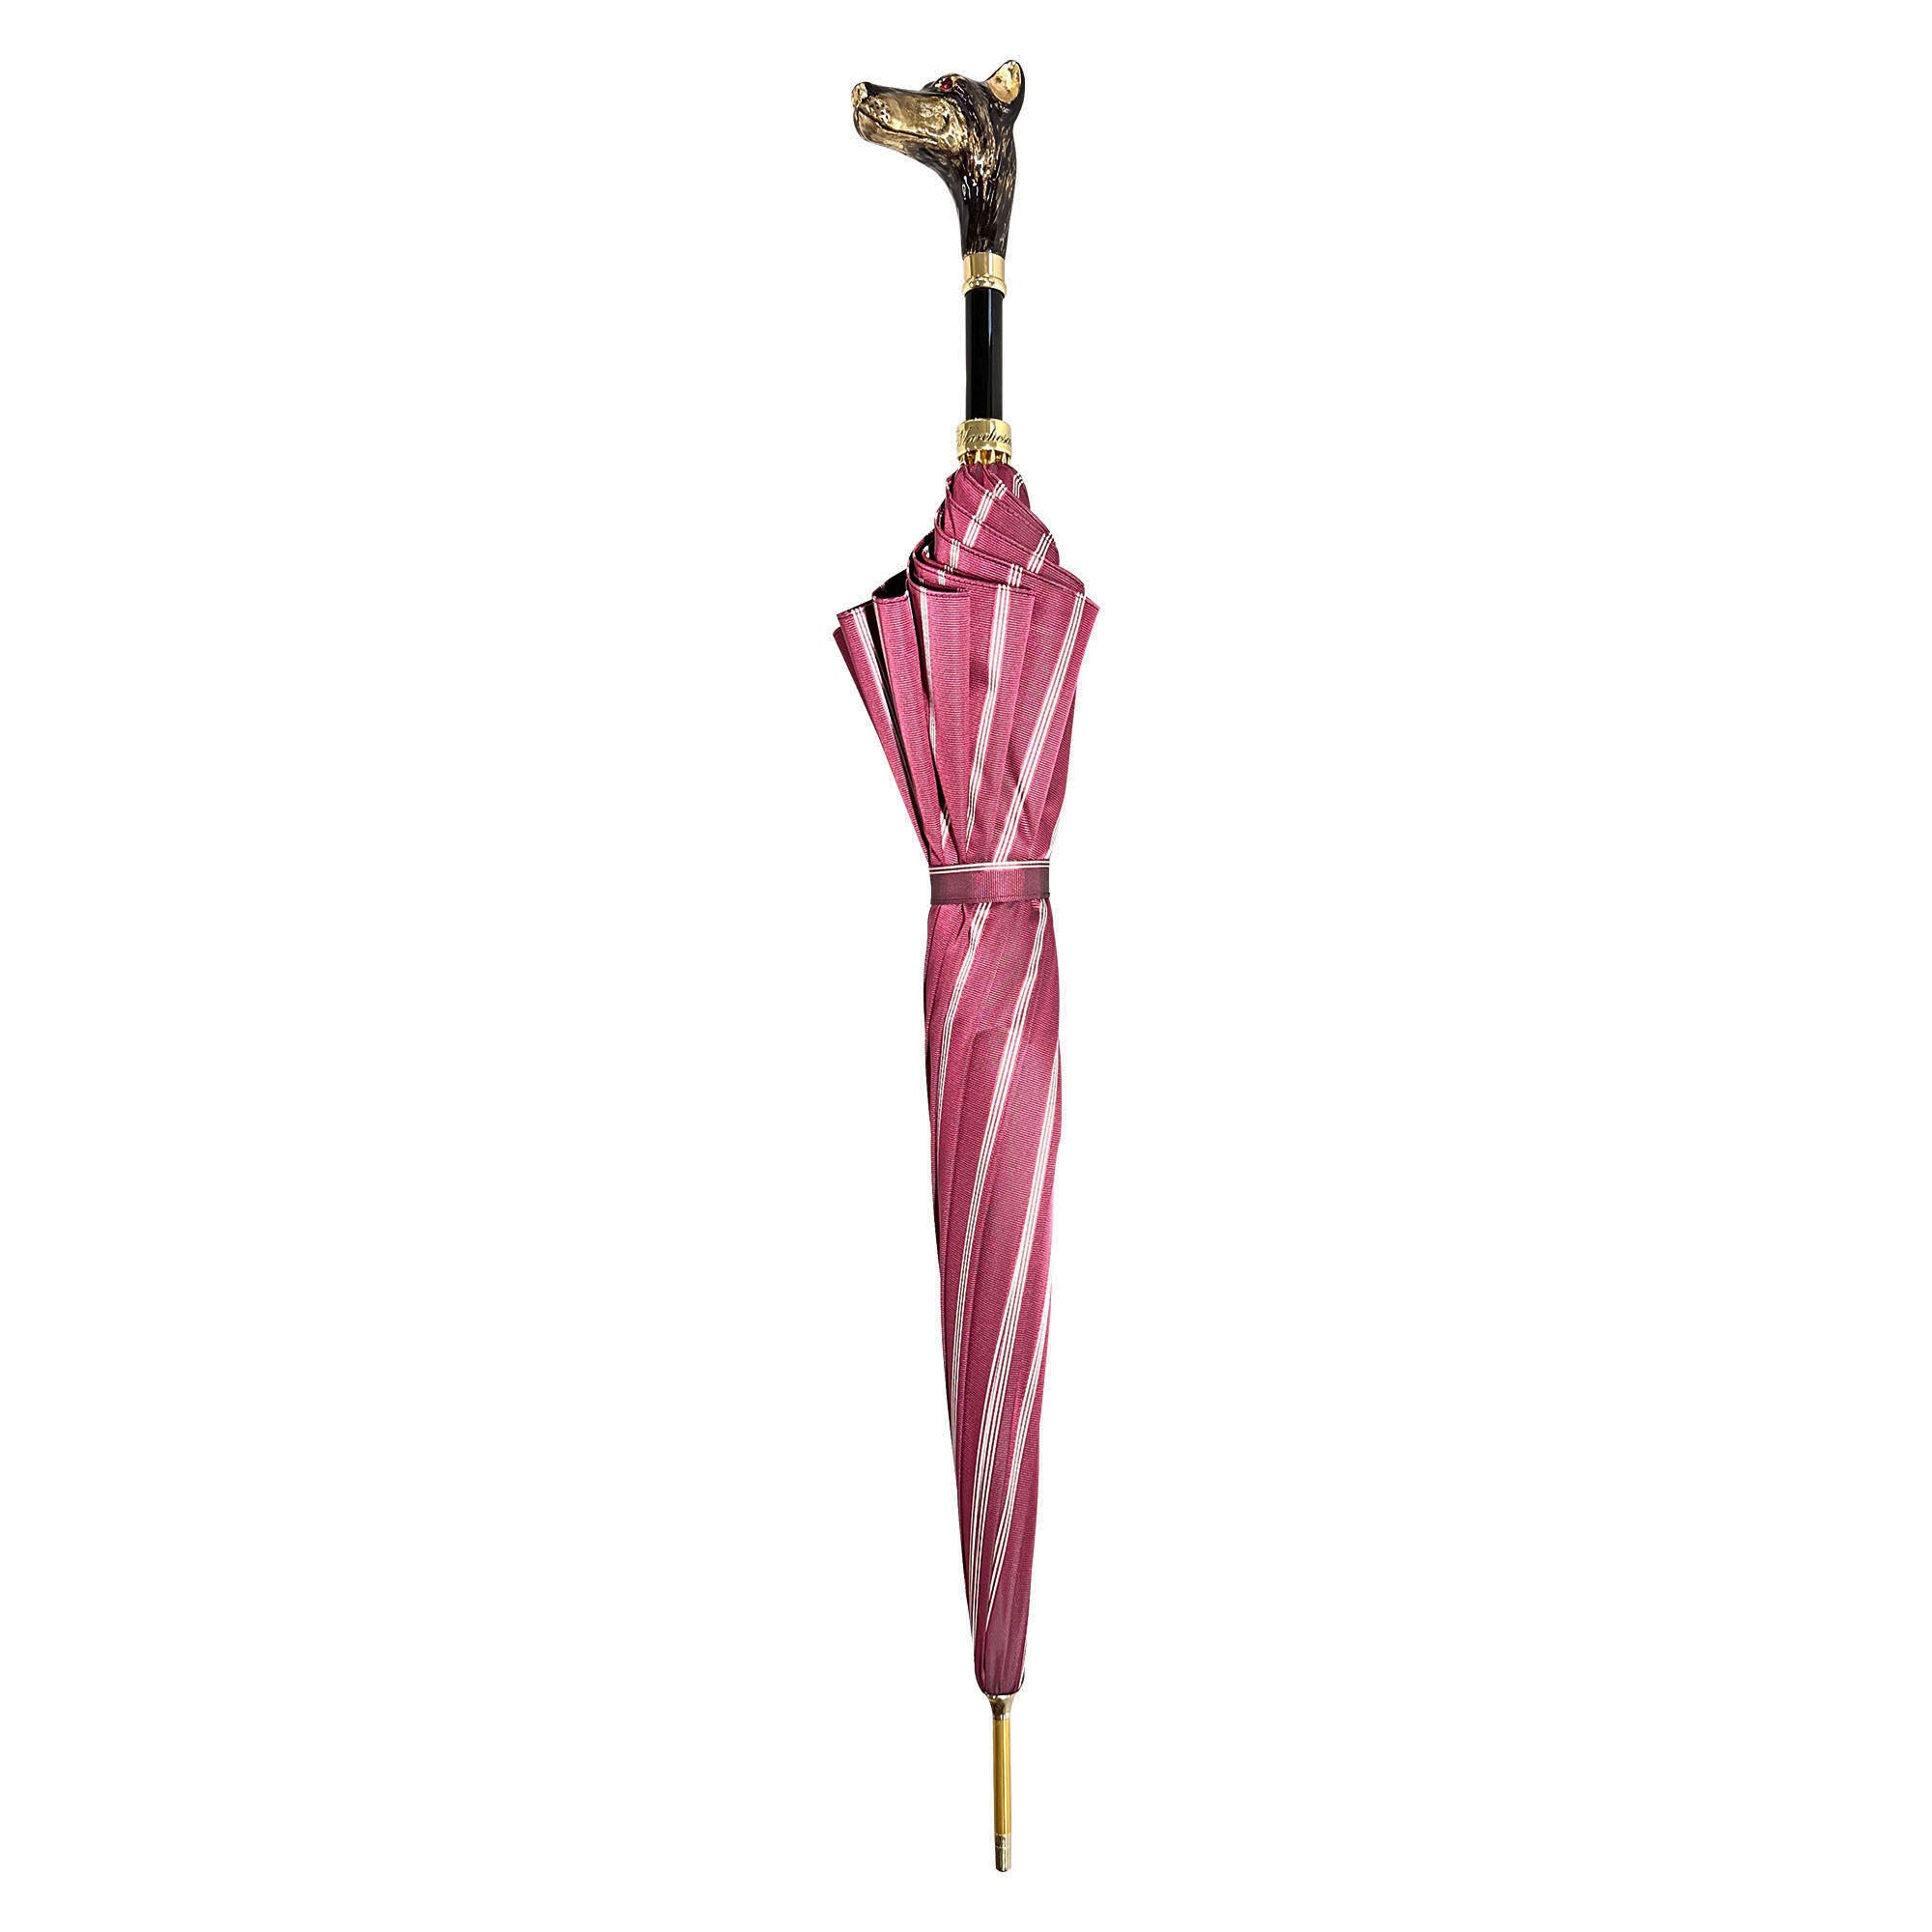 Stylish umbrella - Goldplated 24K Dobermann handle